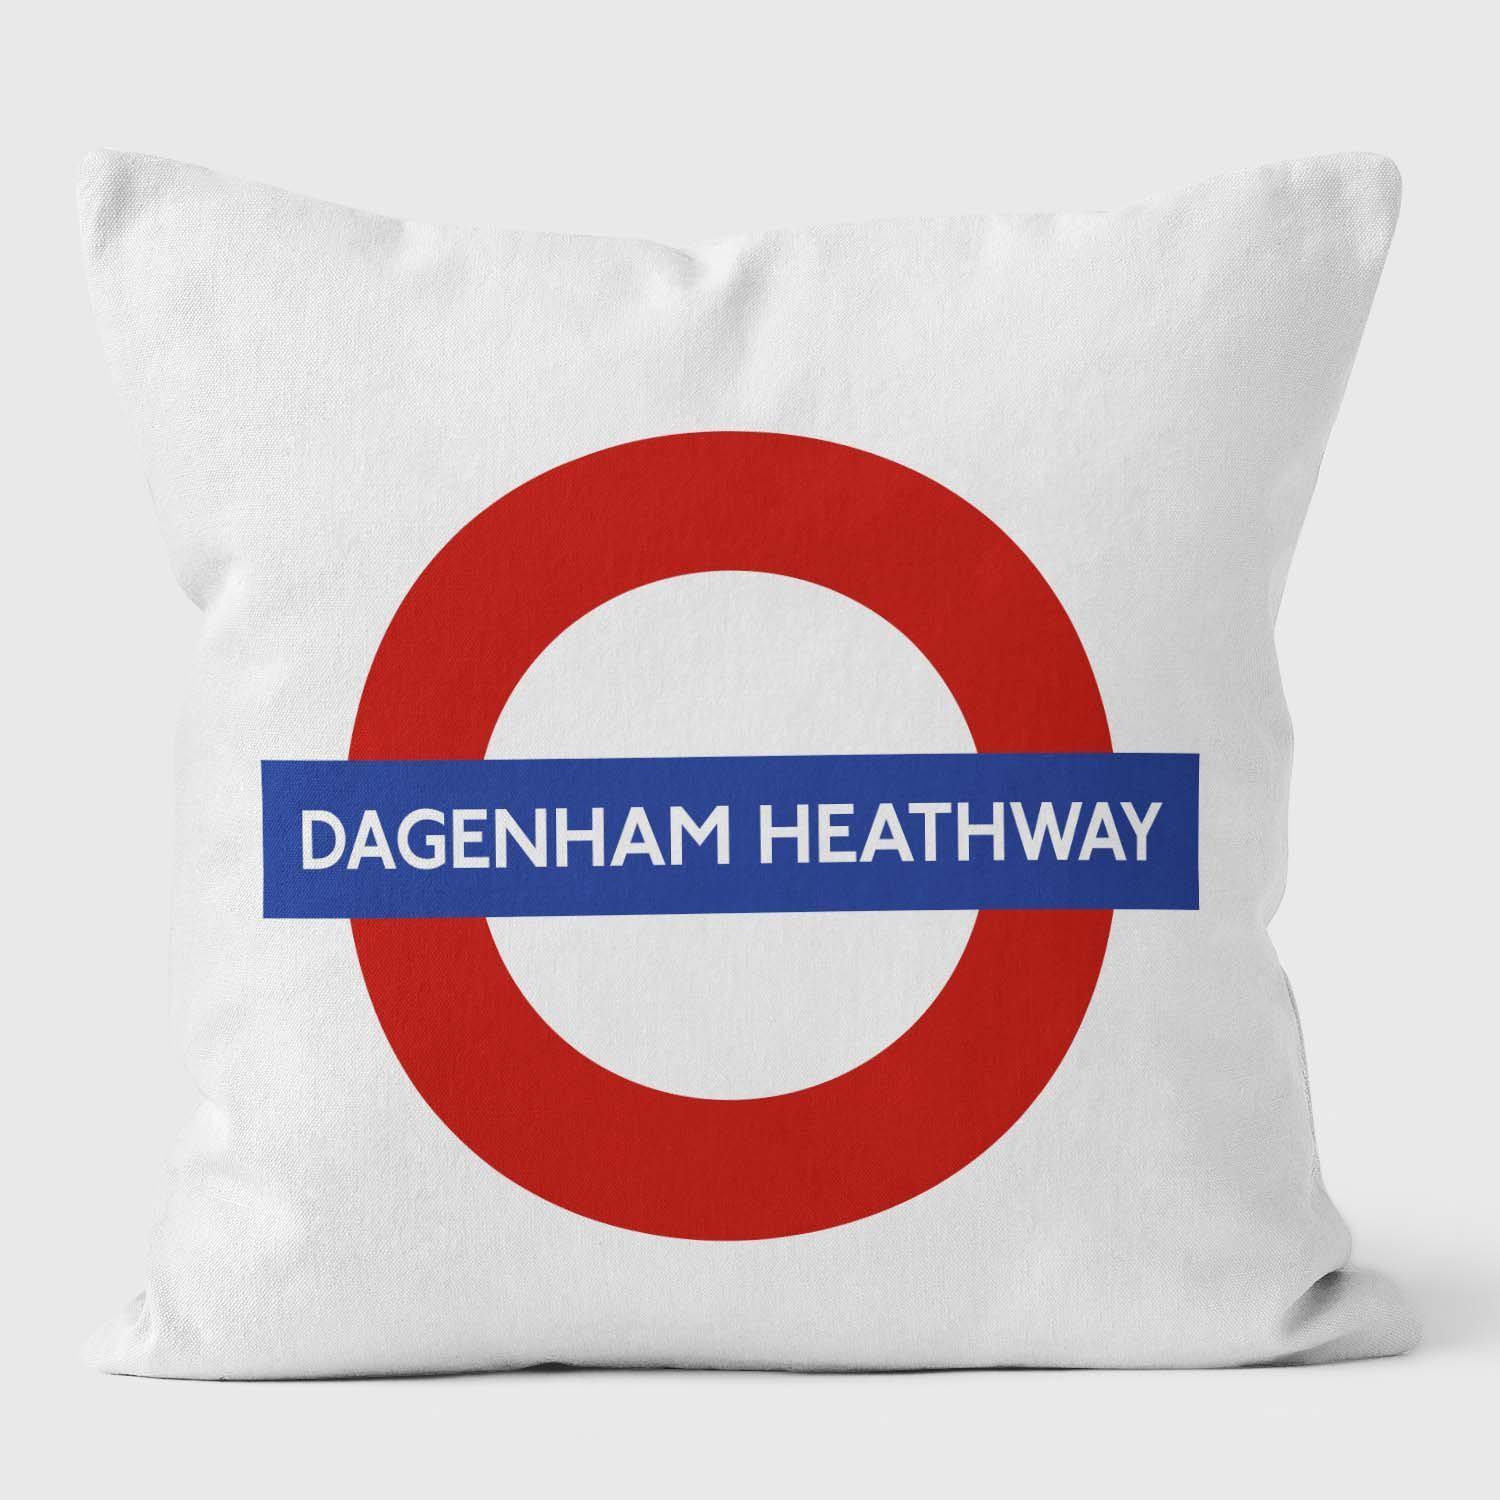 Dagenham Heathway London Underground Tube Station Roundel Cushion - Handmade Cushions UK - WeLoveCushions